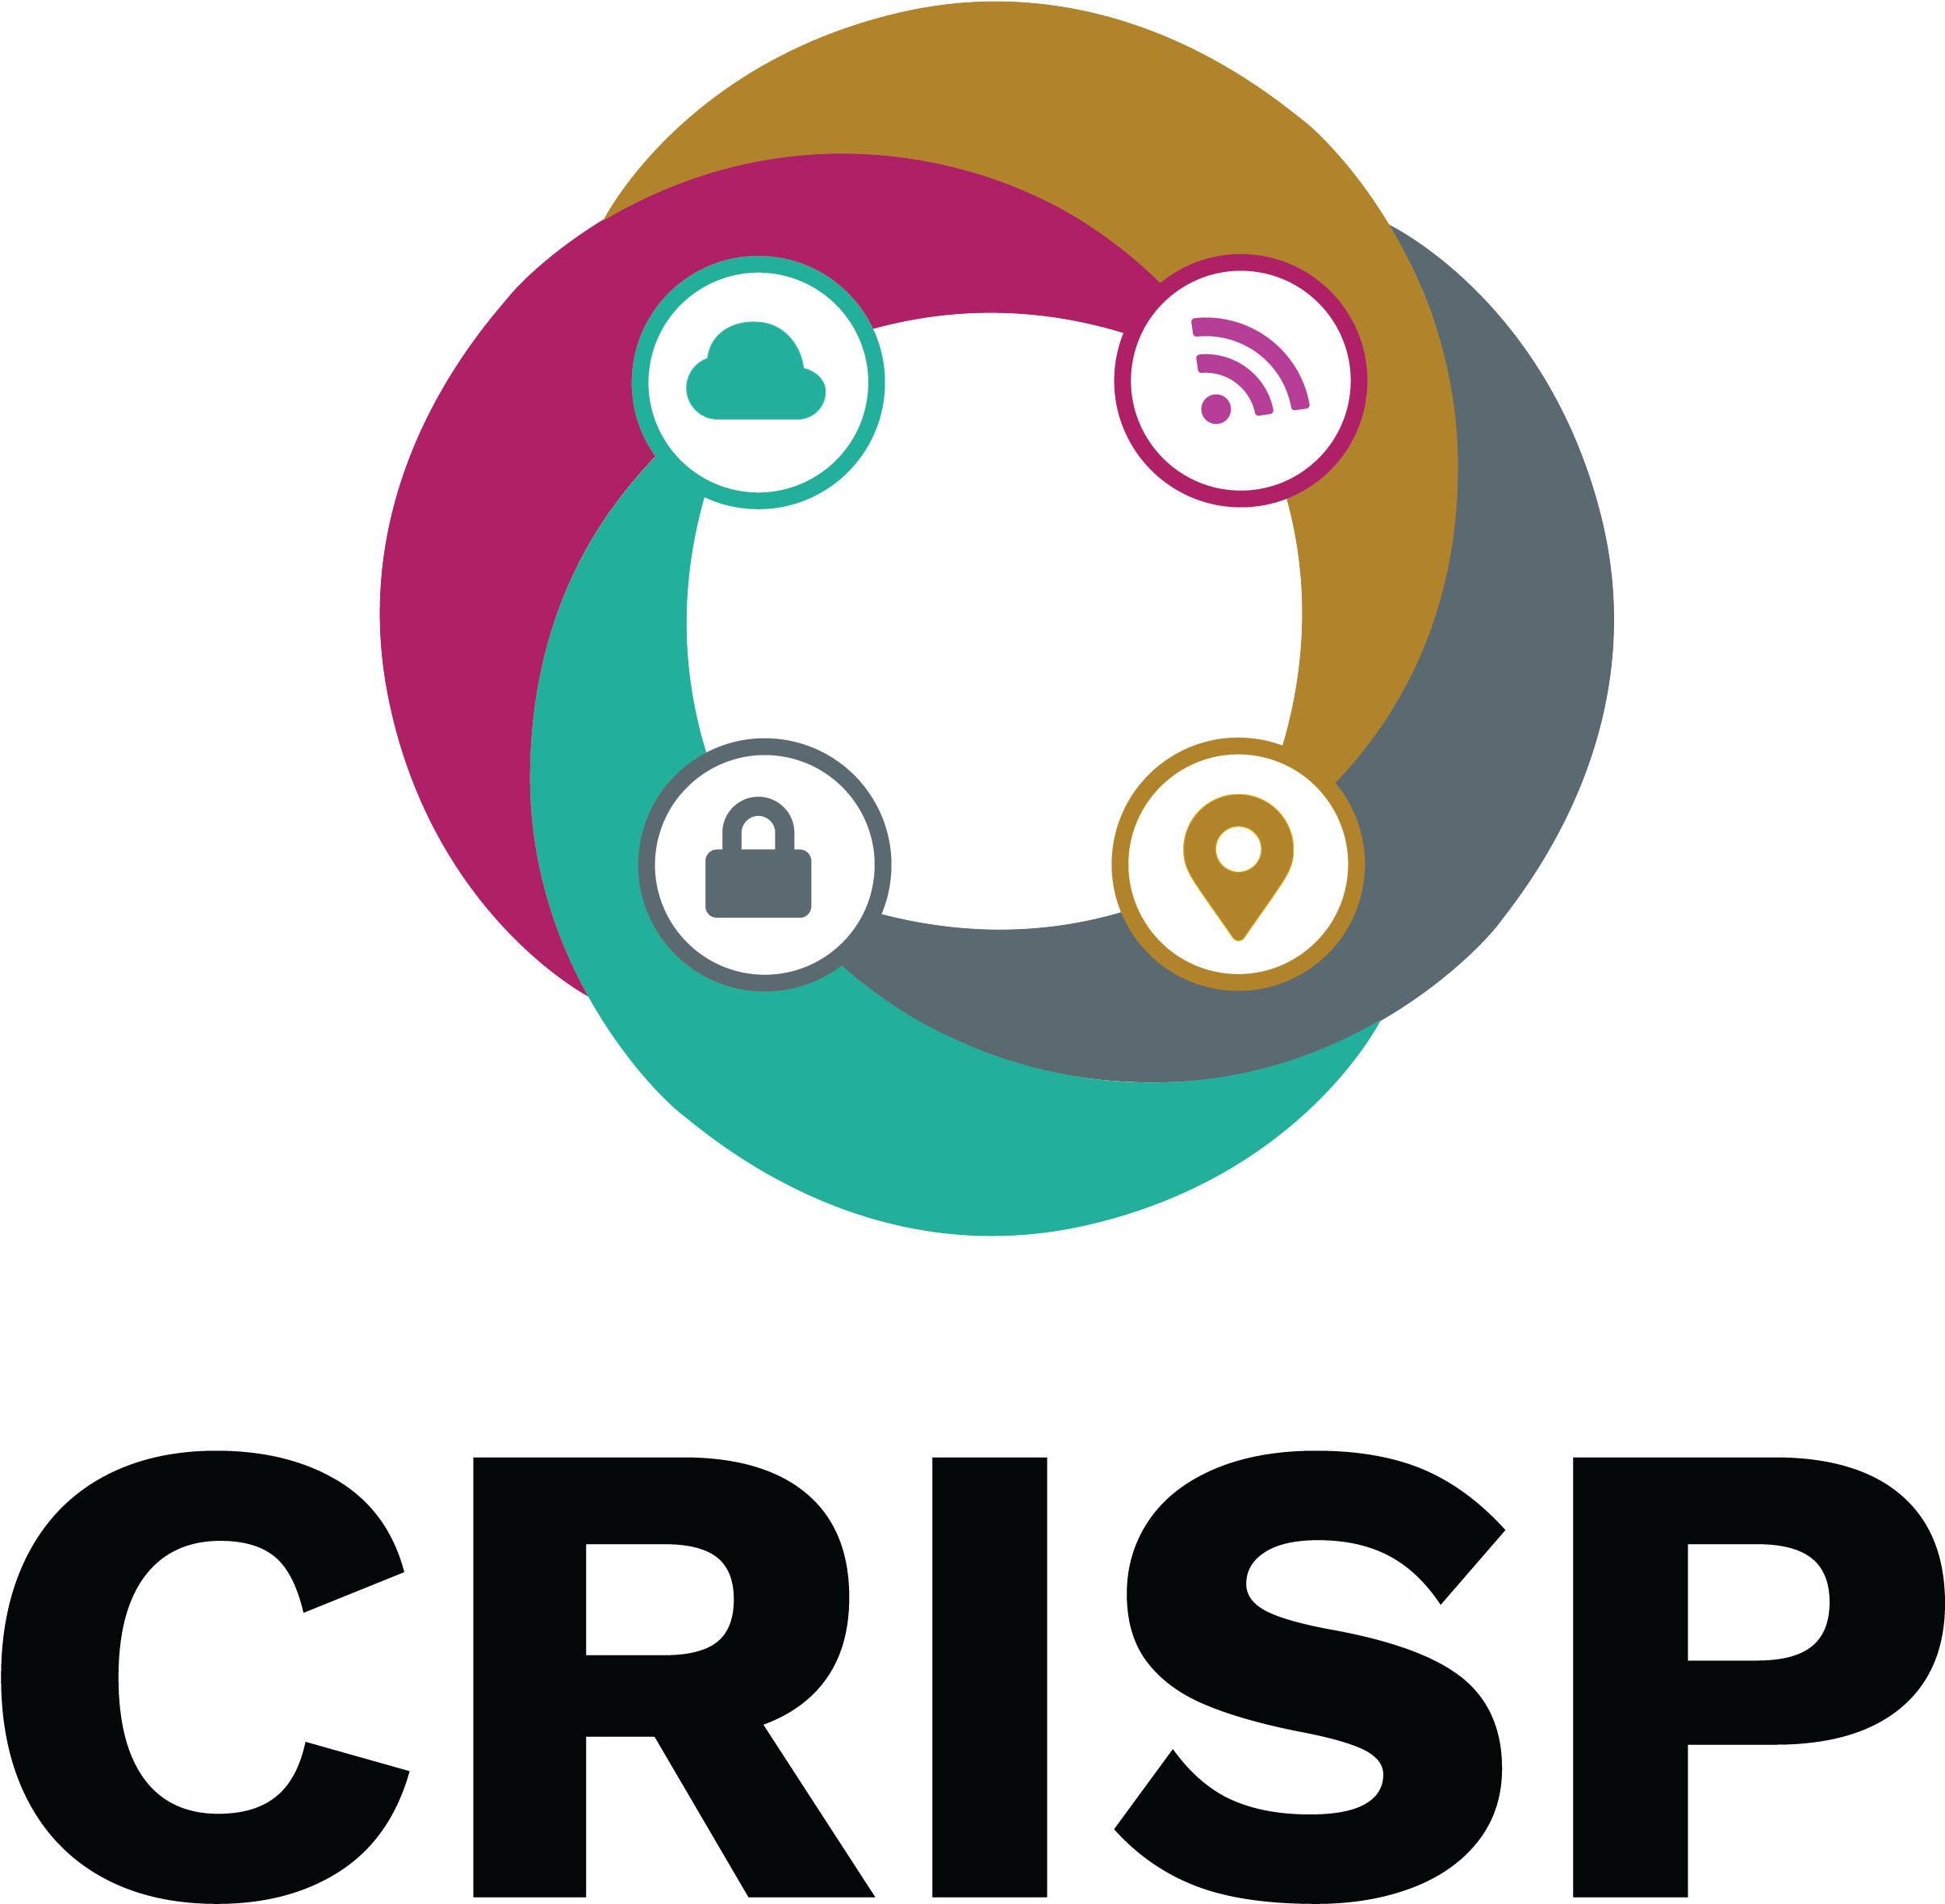 Crisp Leadership Team Has Been Awarded A Grant From - Hogar De Cristo (2701x2701)